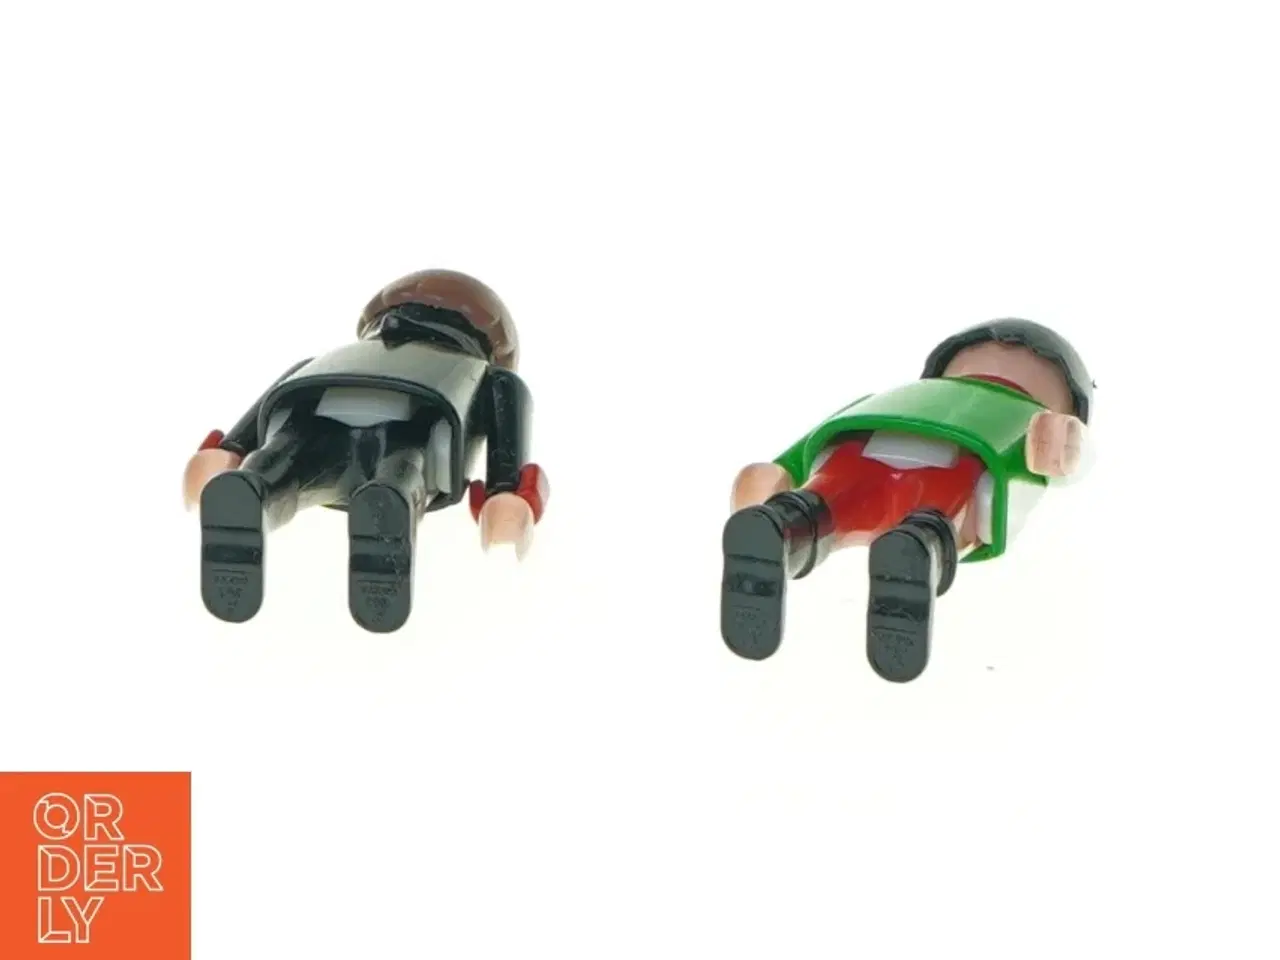 Billede 3 - Playmobil figurer fra Playmobil (str. 7 x 3 cm)